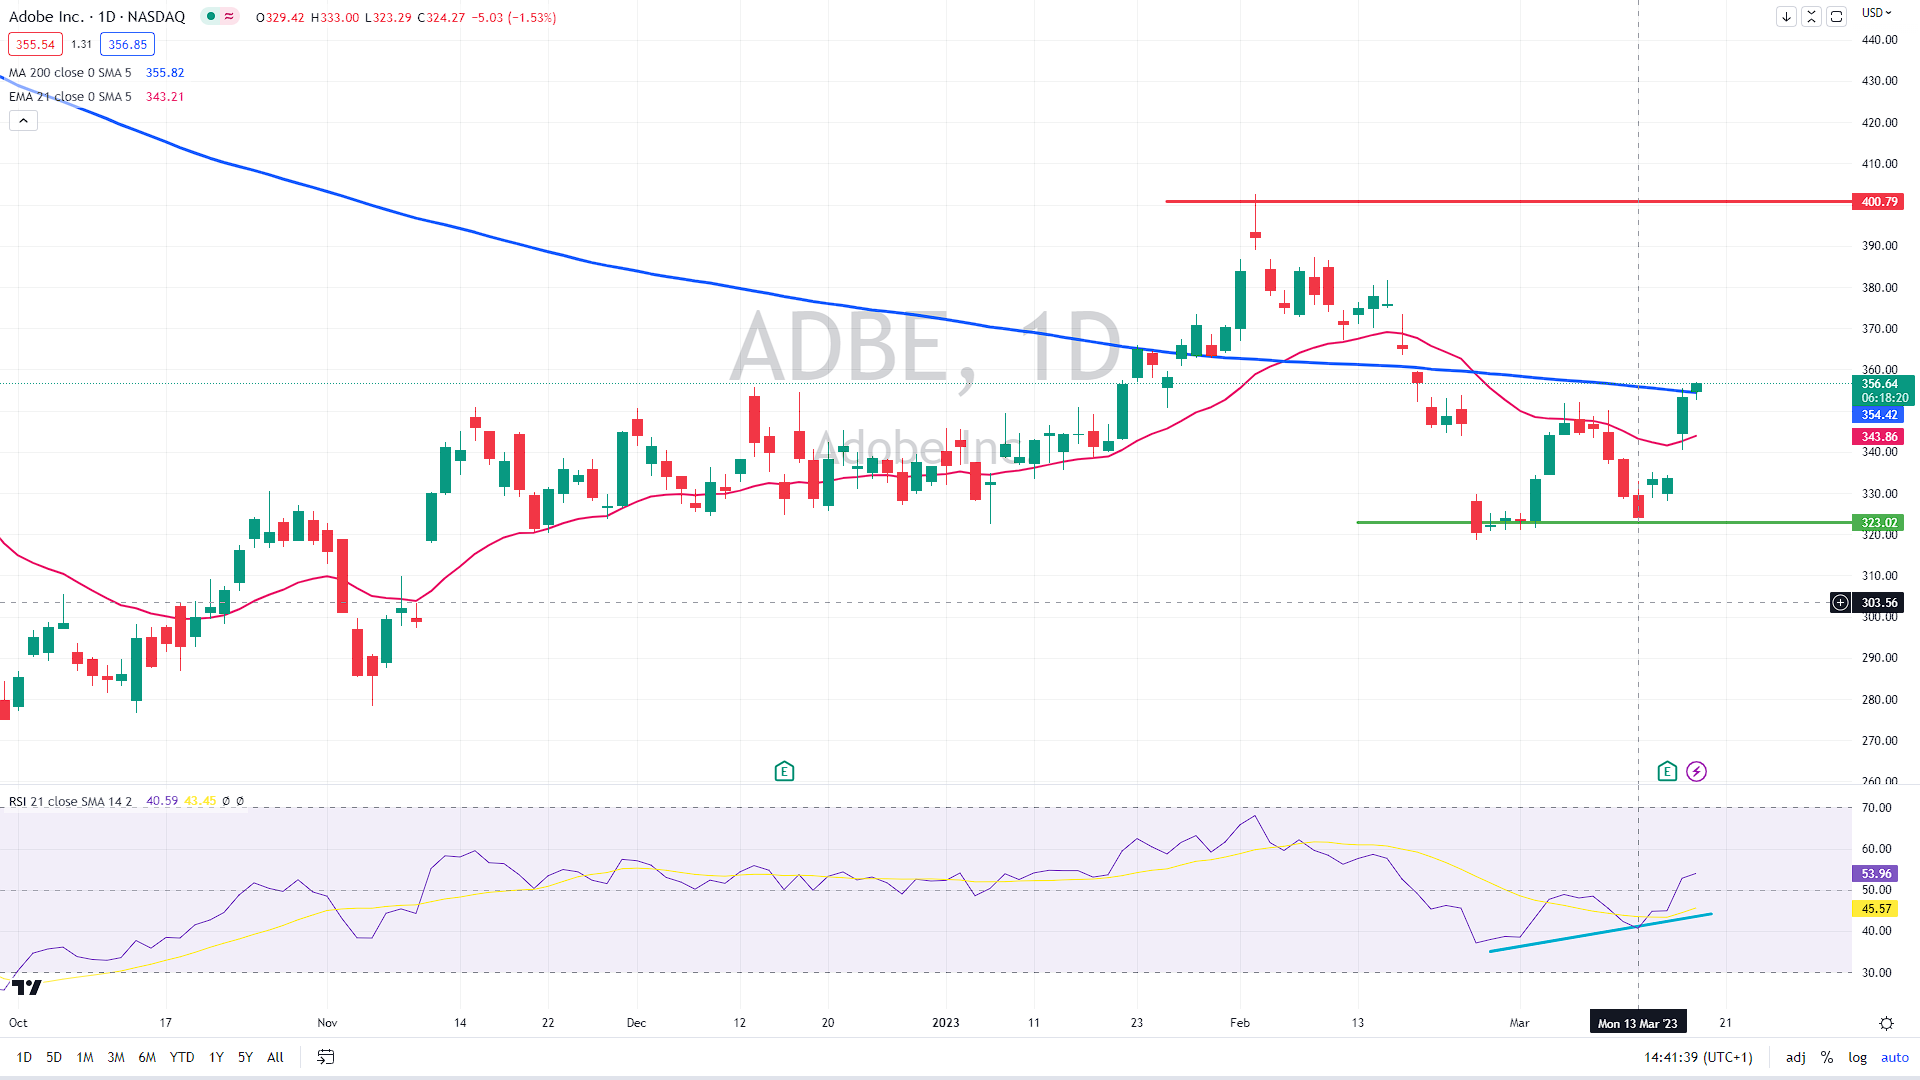 Adobe stock daily chart